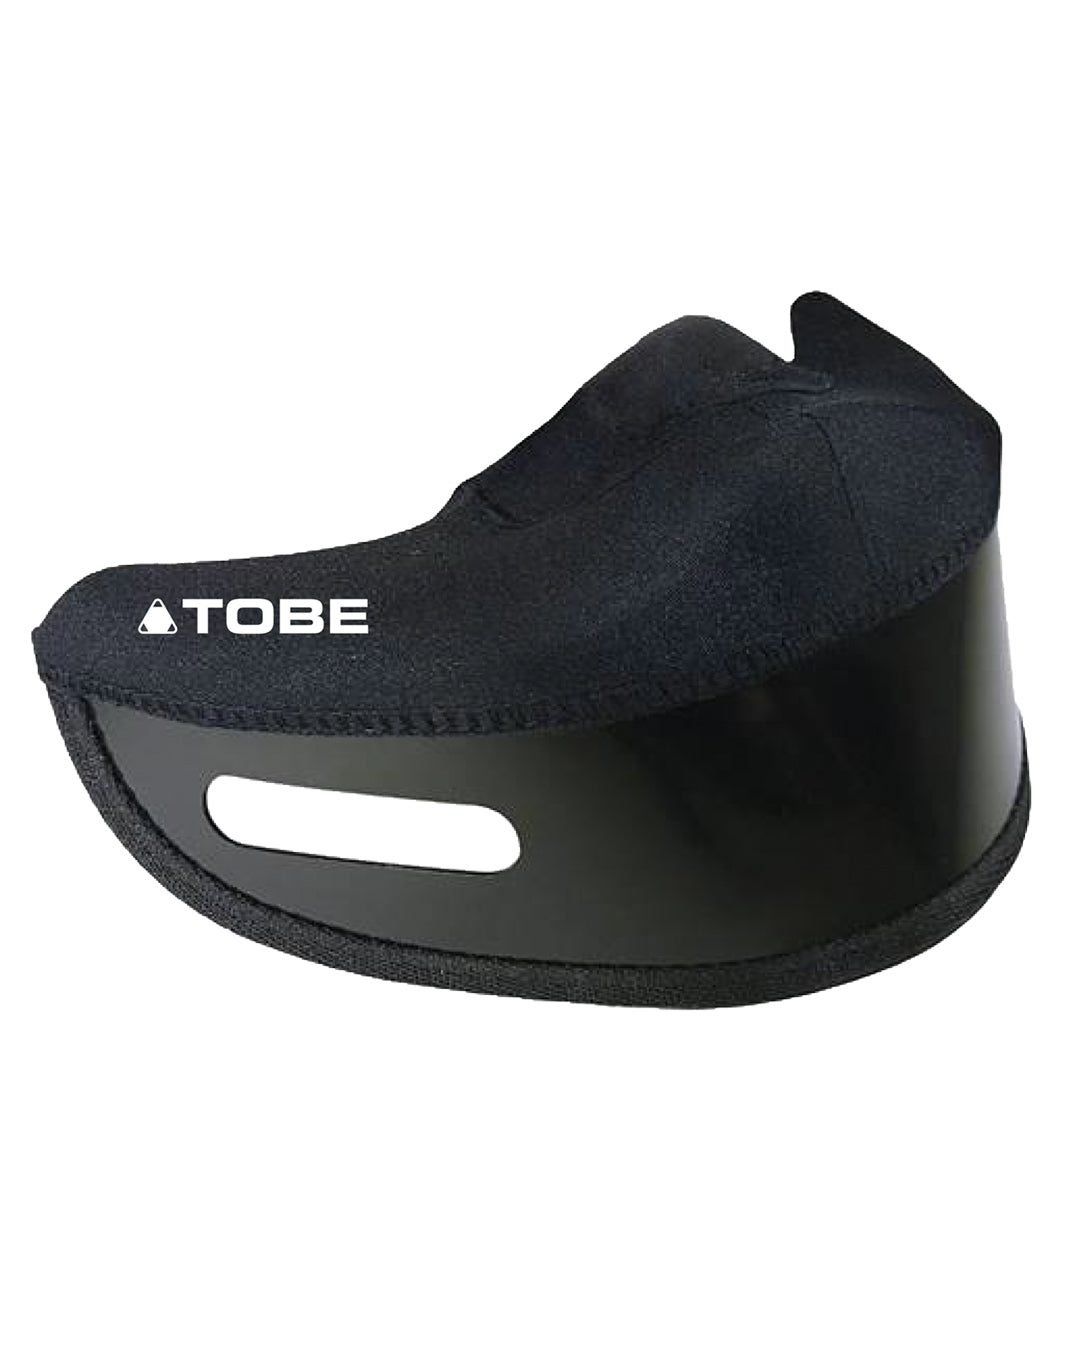 Tobe Outerwear Vale Helmet Breath Box 620122-001-111